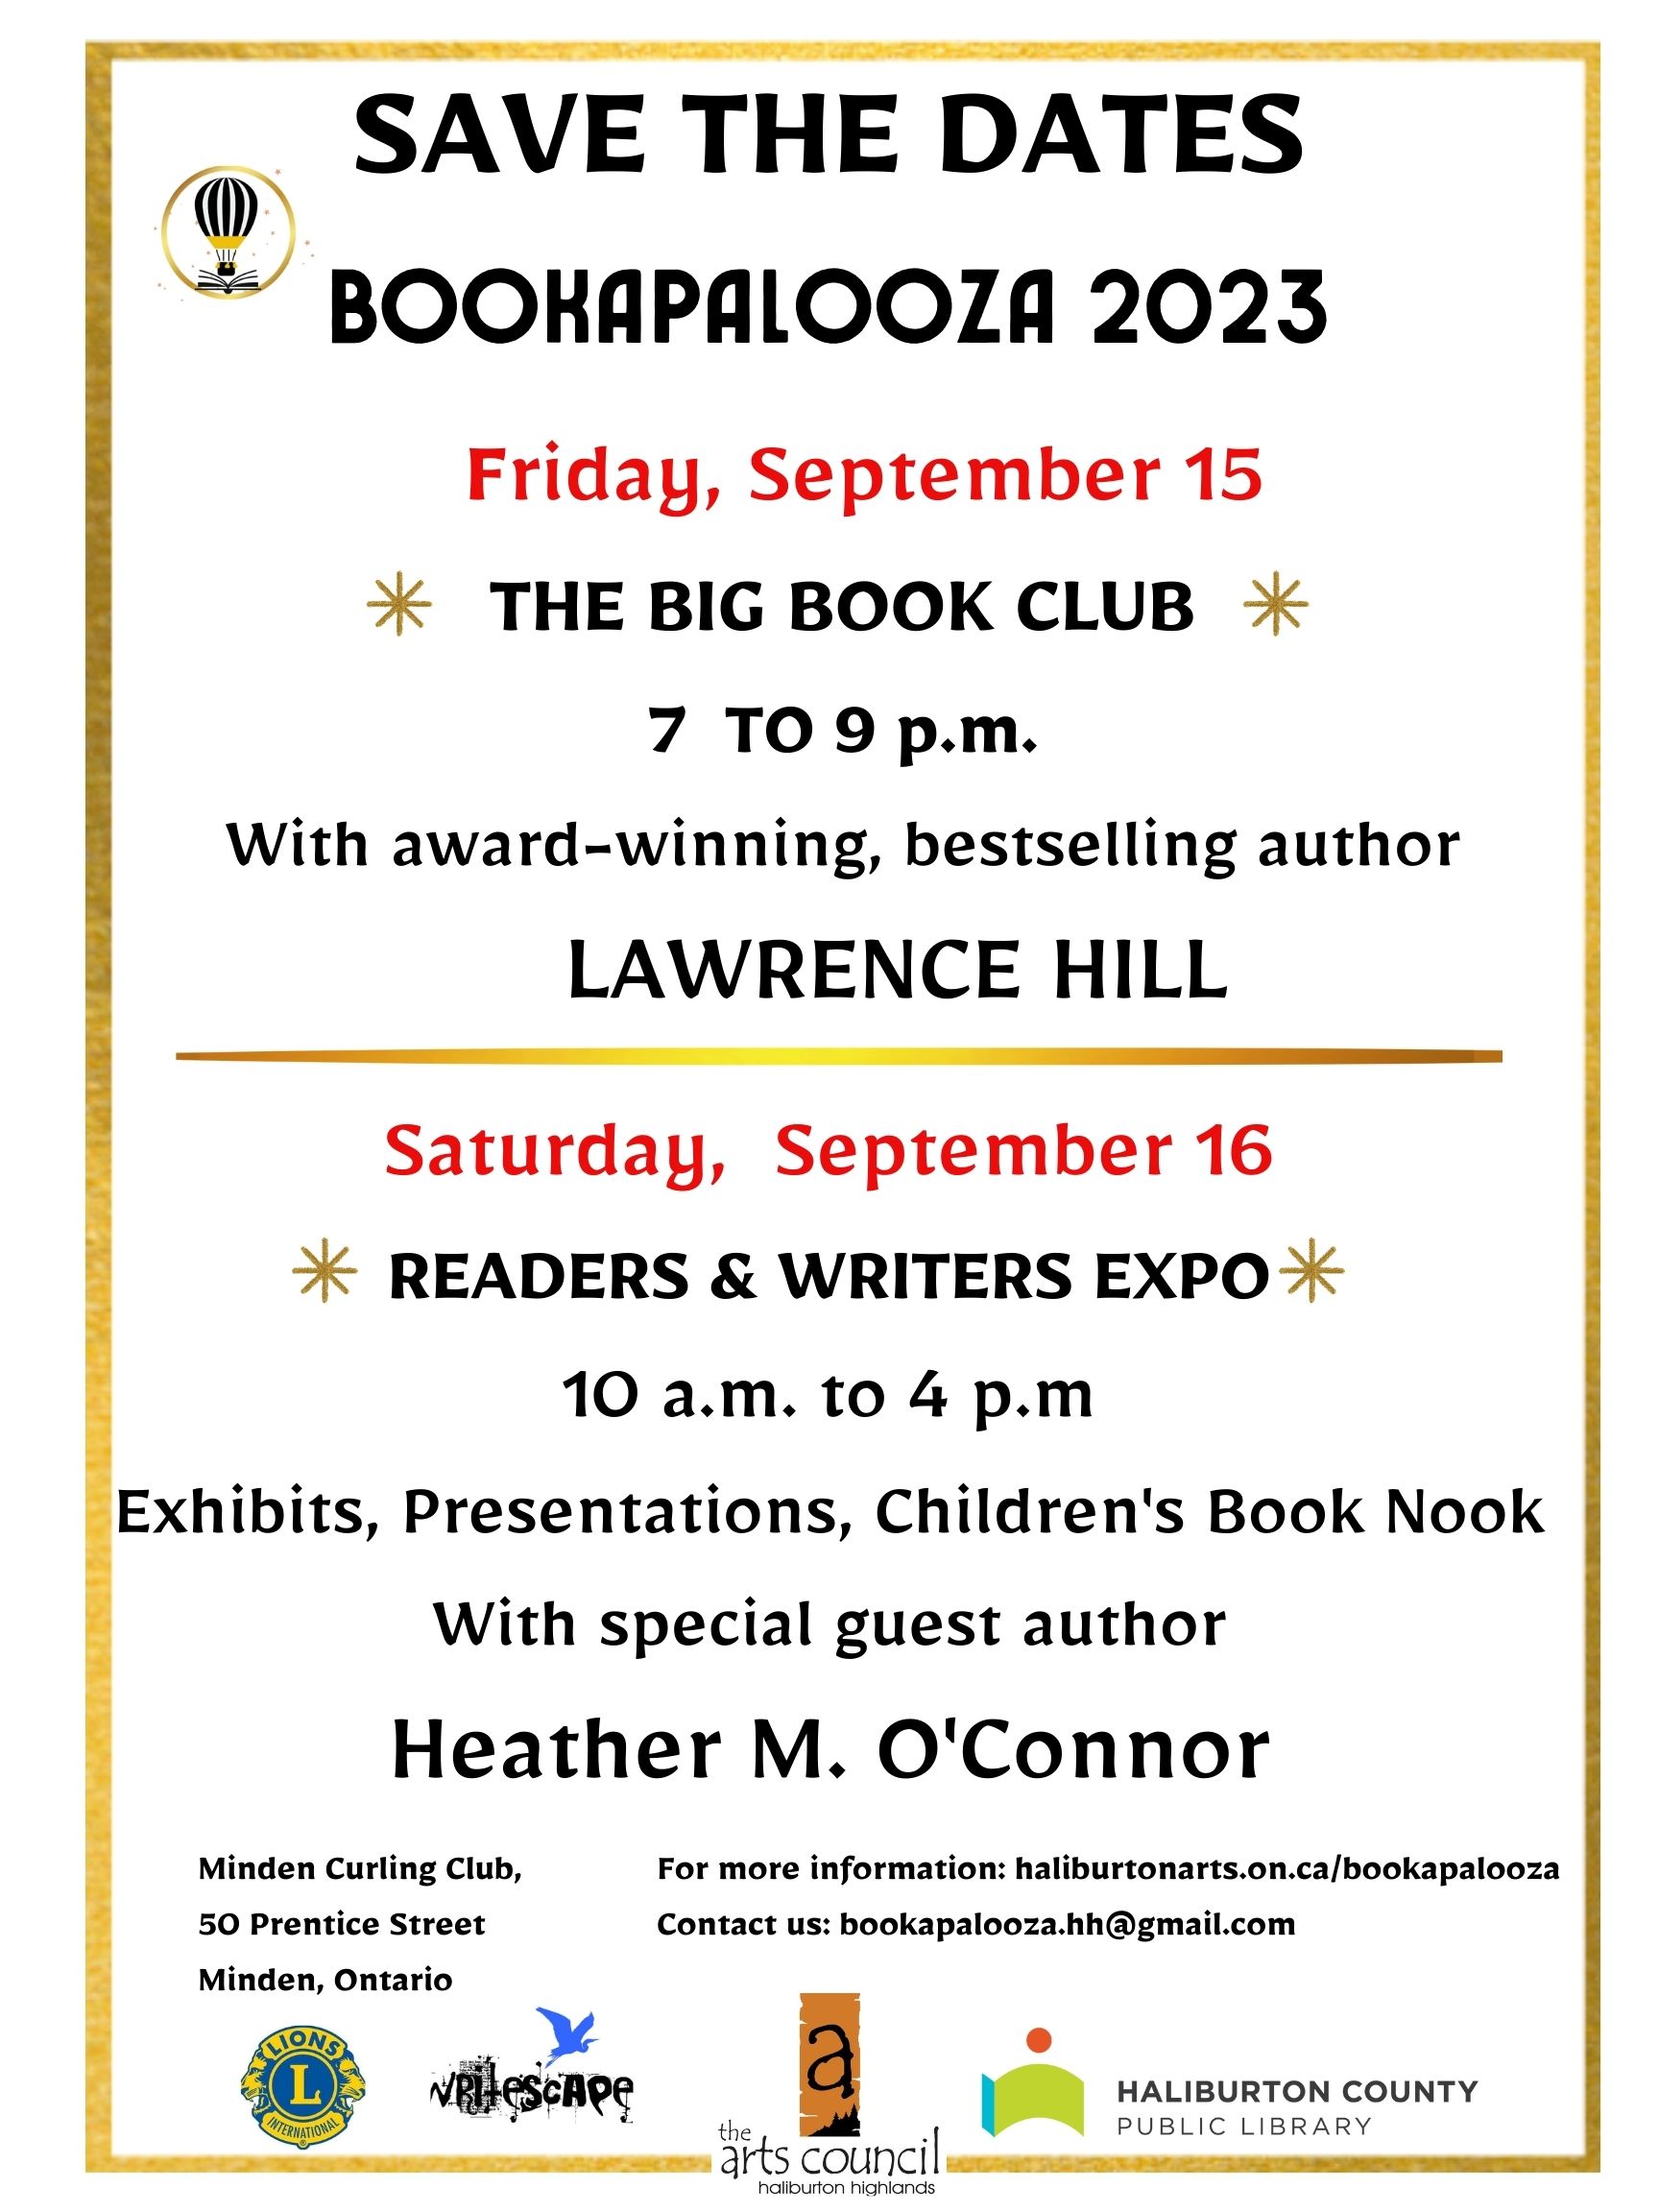 Flyer detailing Bookapalooza two-day event in Haliburton Highlands September 2023